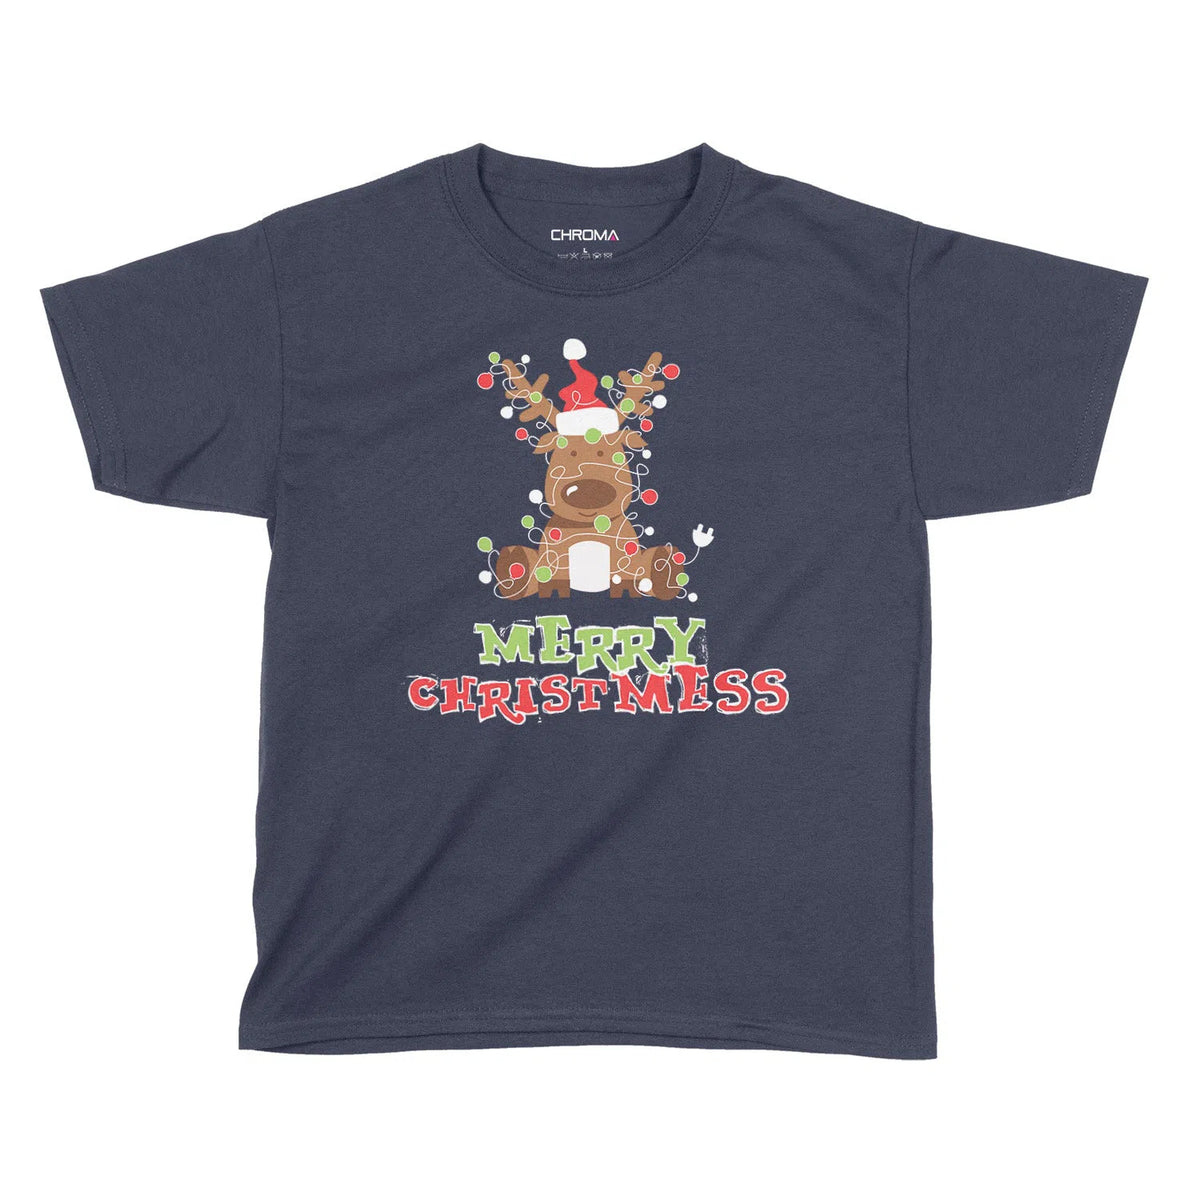 Merry Christmess | Kids Christmas T-Shirt Chroma Clothing